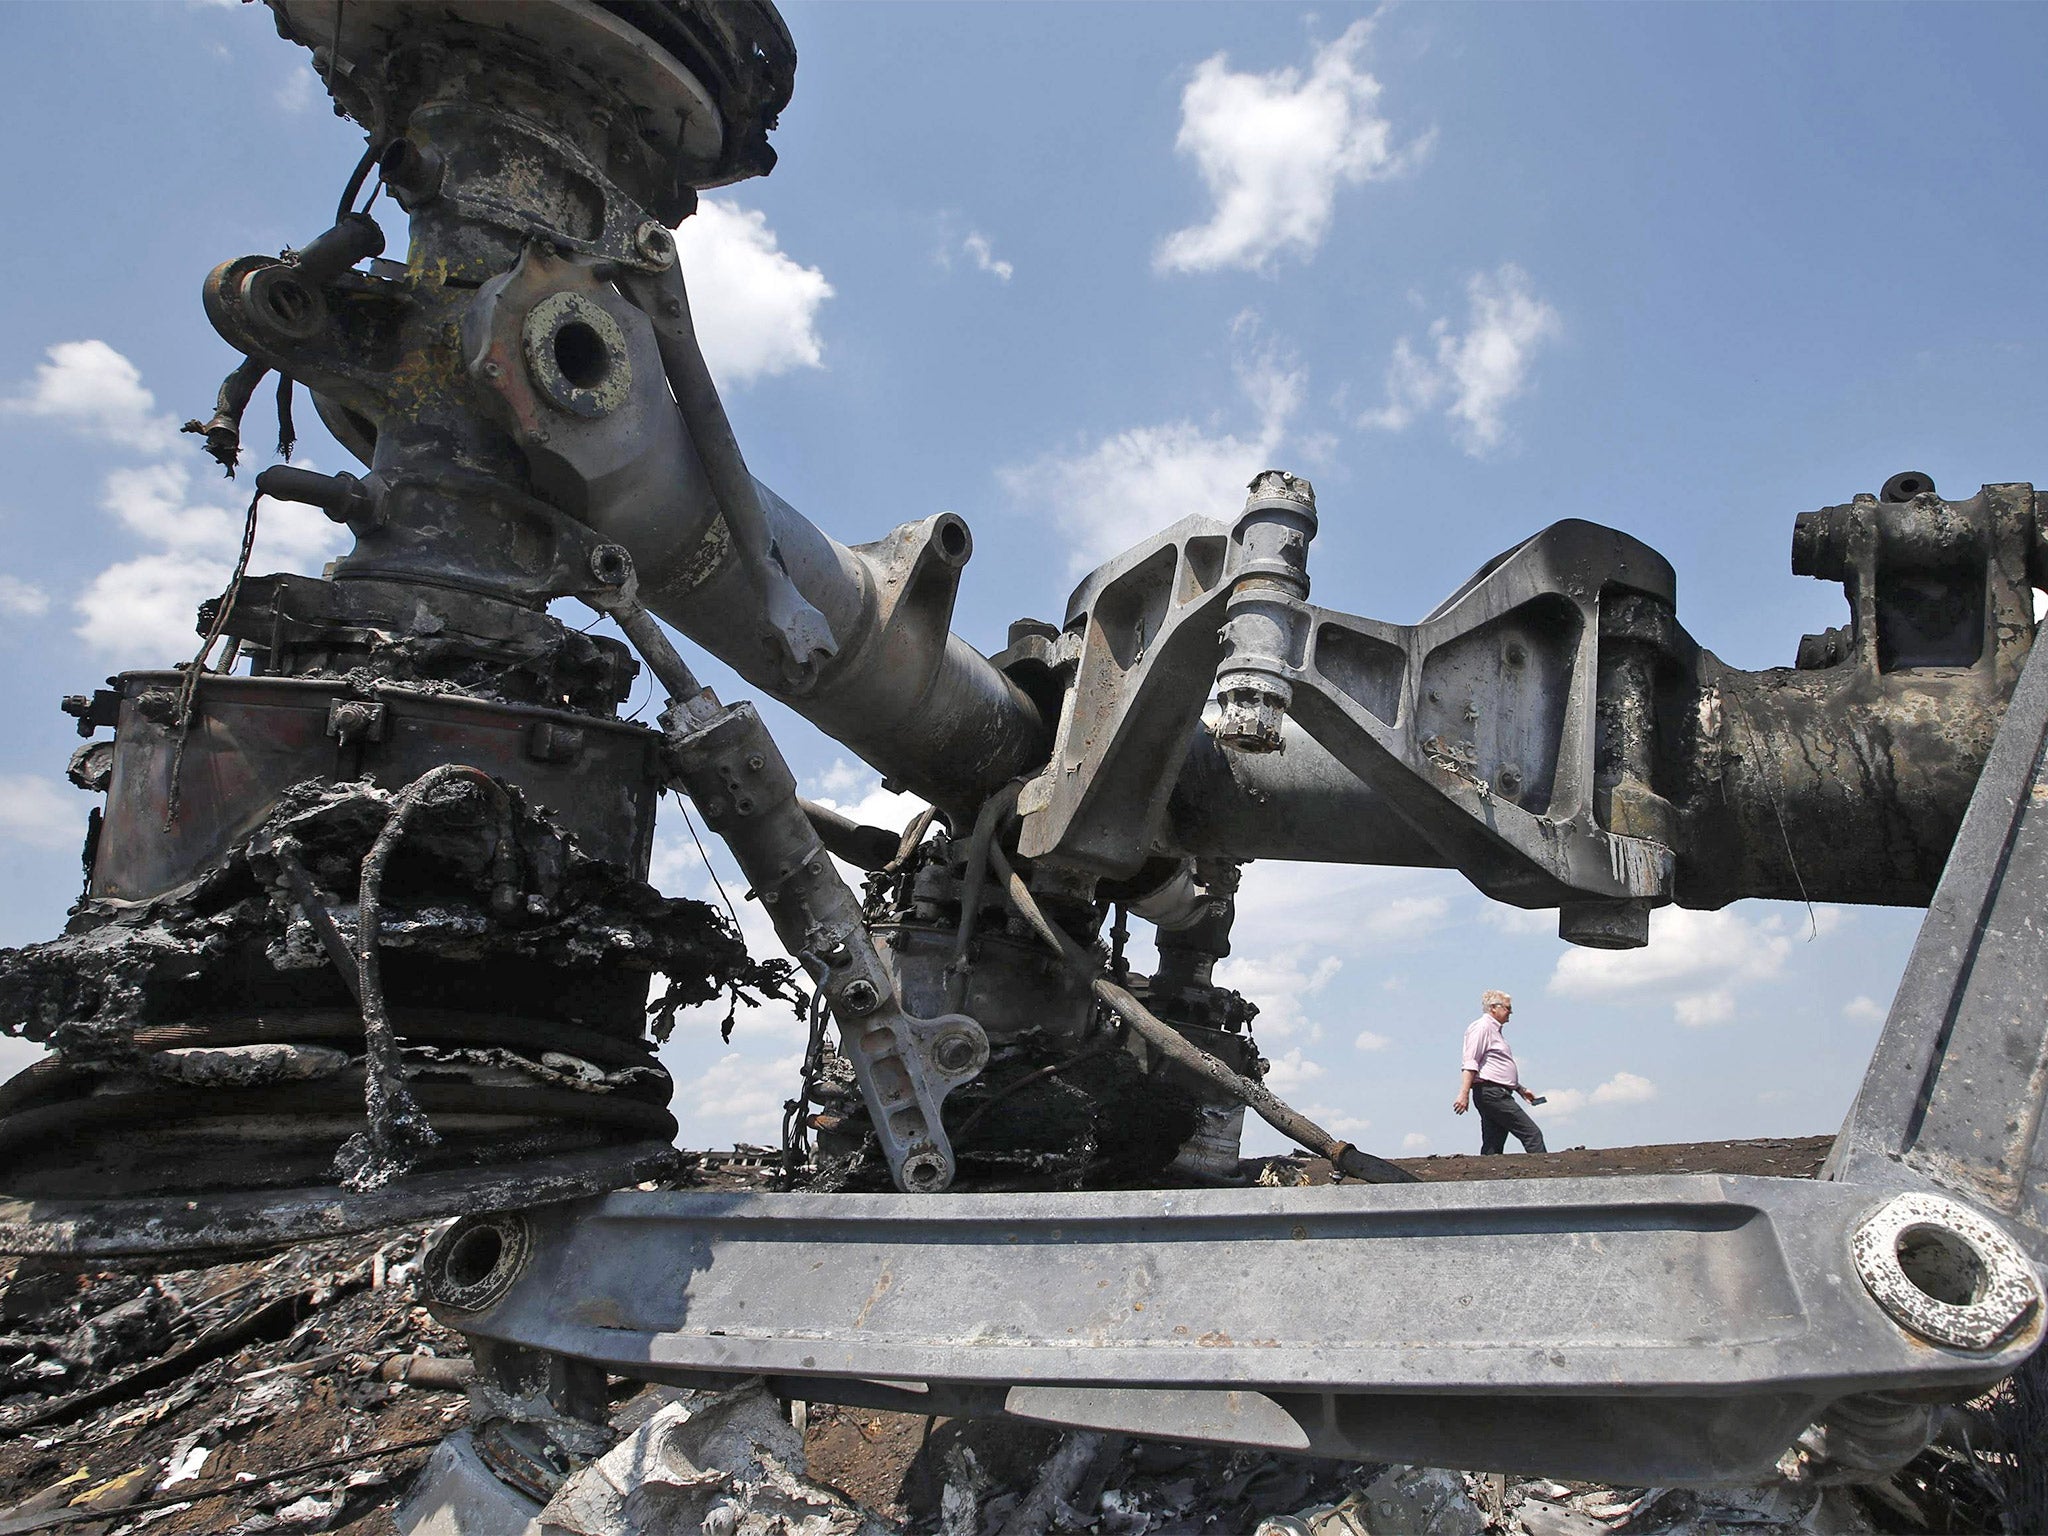 The MH17 crash scene near Hrabove (Grabovo) in the Donetsk region of Ukraine